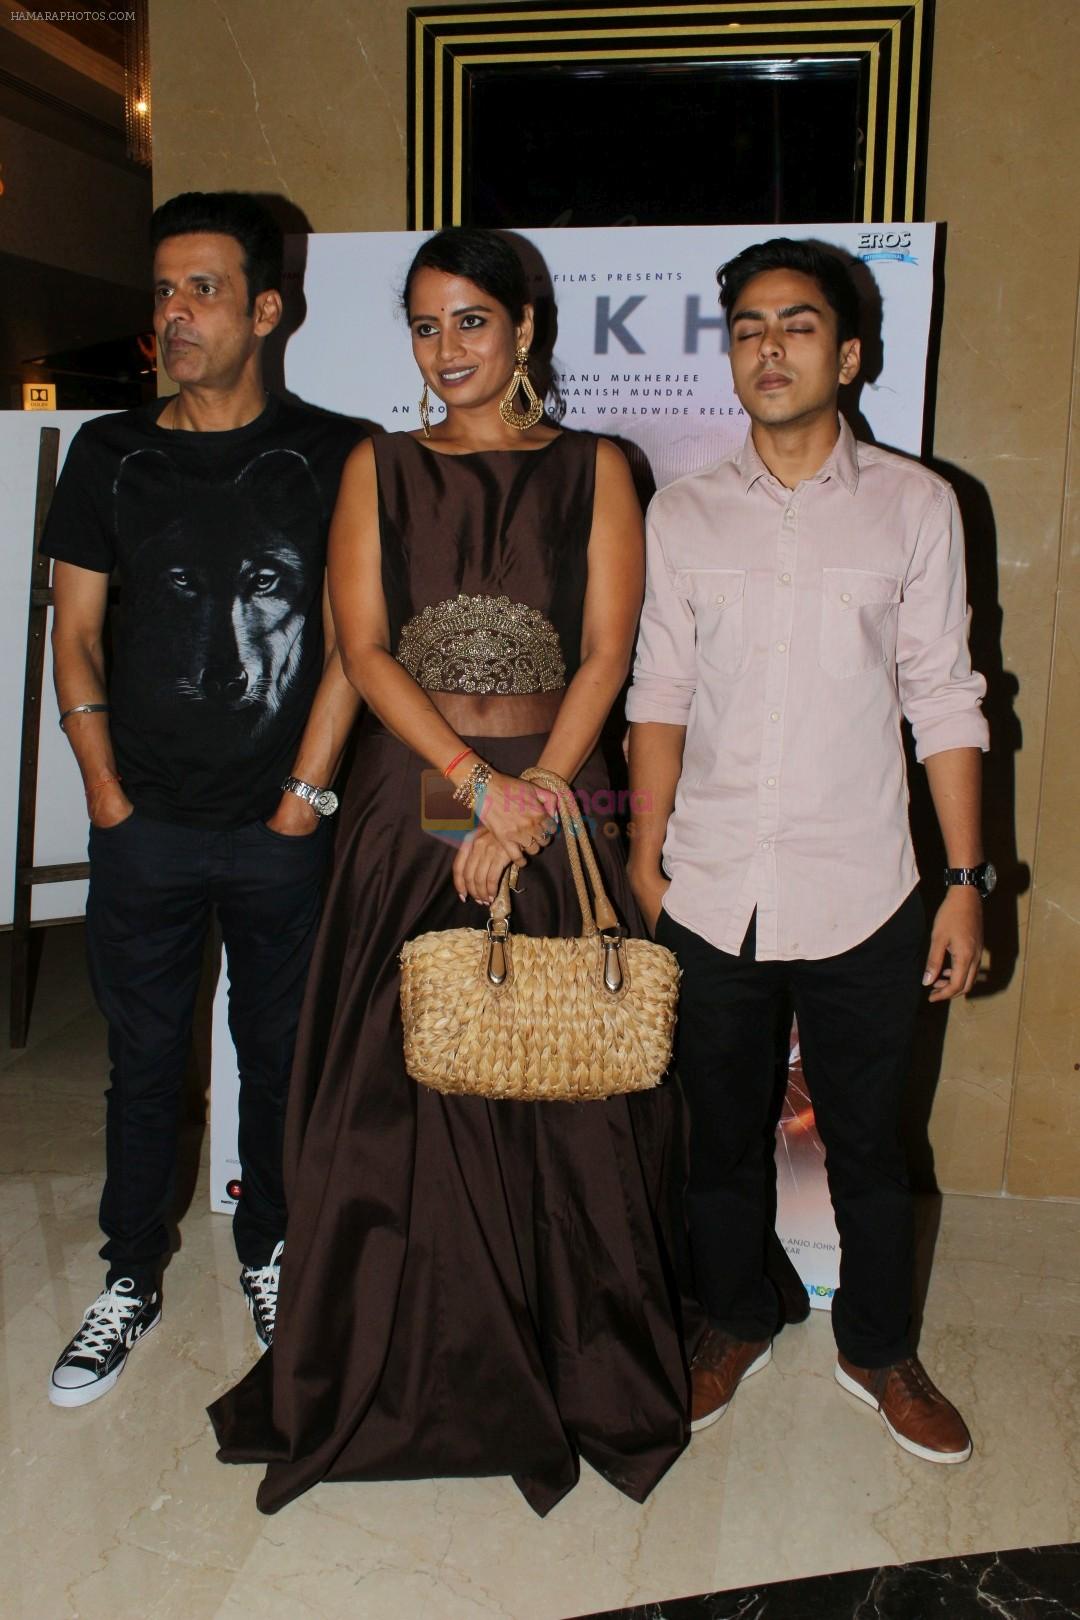 Manoj Bajpayee, Smita Tambe, Adarsh Gourav at the Screening Of Rukh Film on 26th Oct 2017